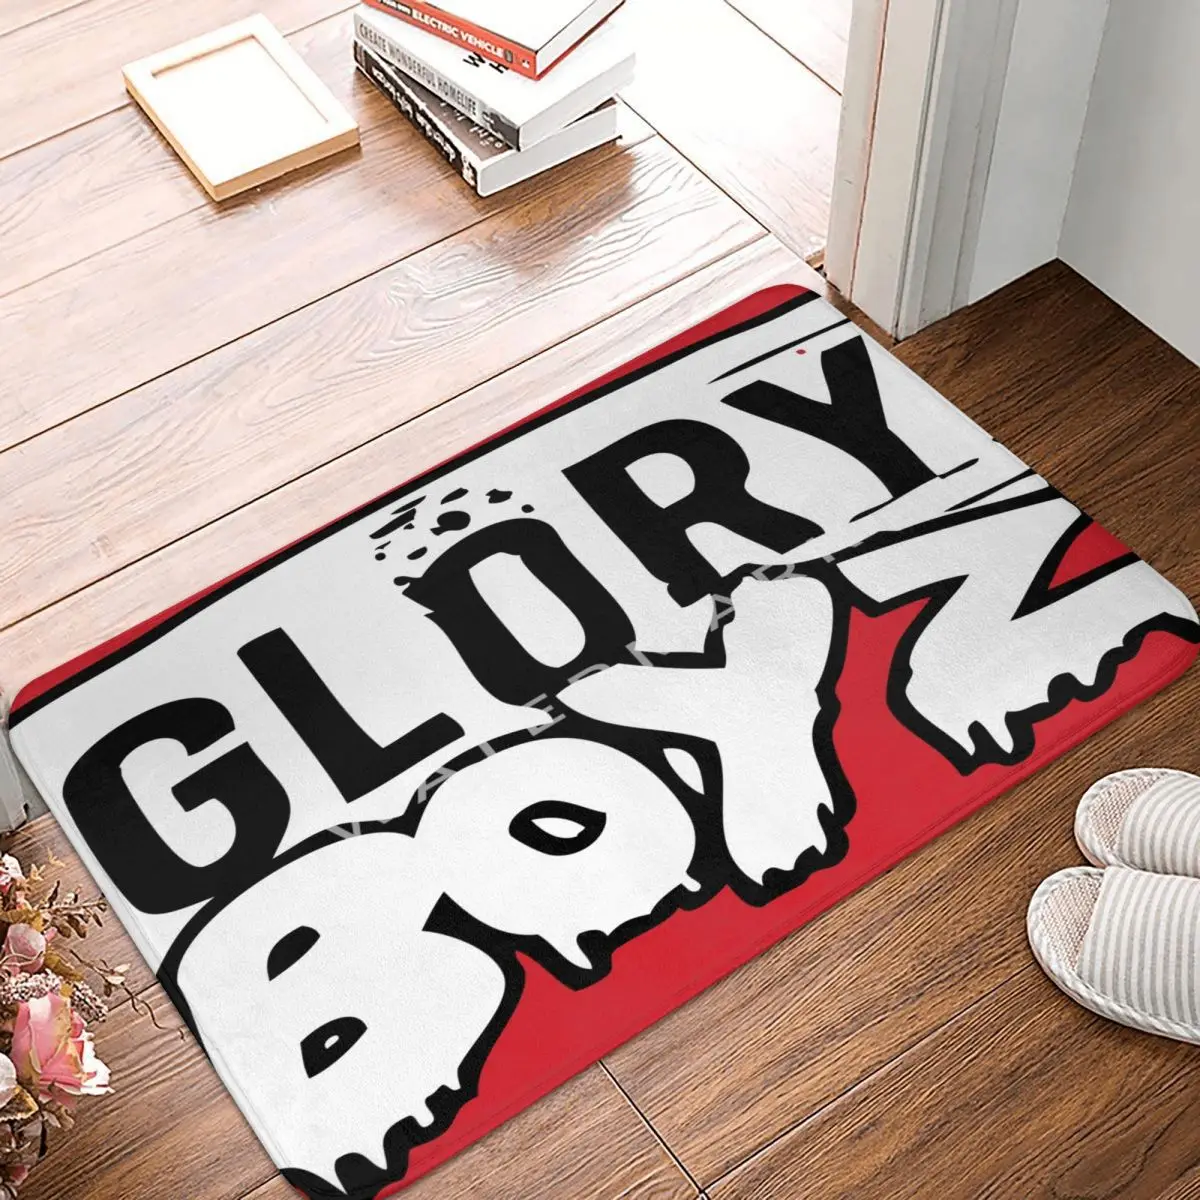 Glory Boyz GBE Carpet, Polyester Floor Mats Fashionable Living Room Everyday Festivle Gifts Mats Customizable